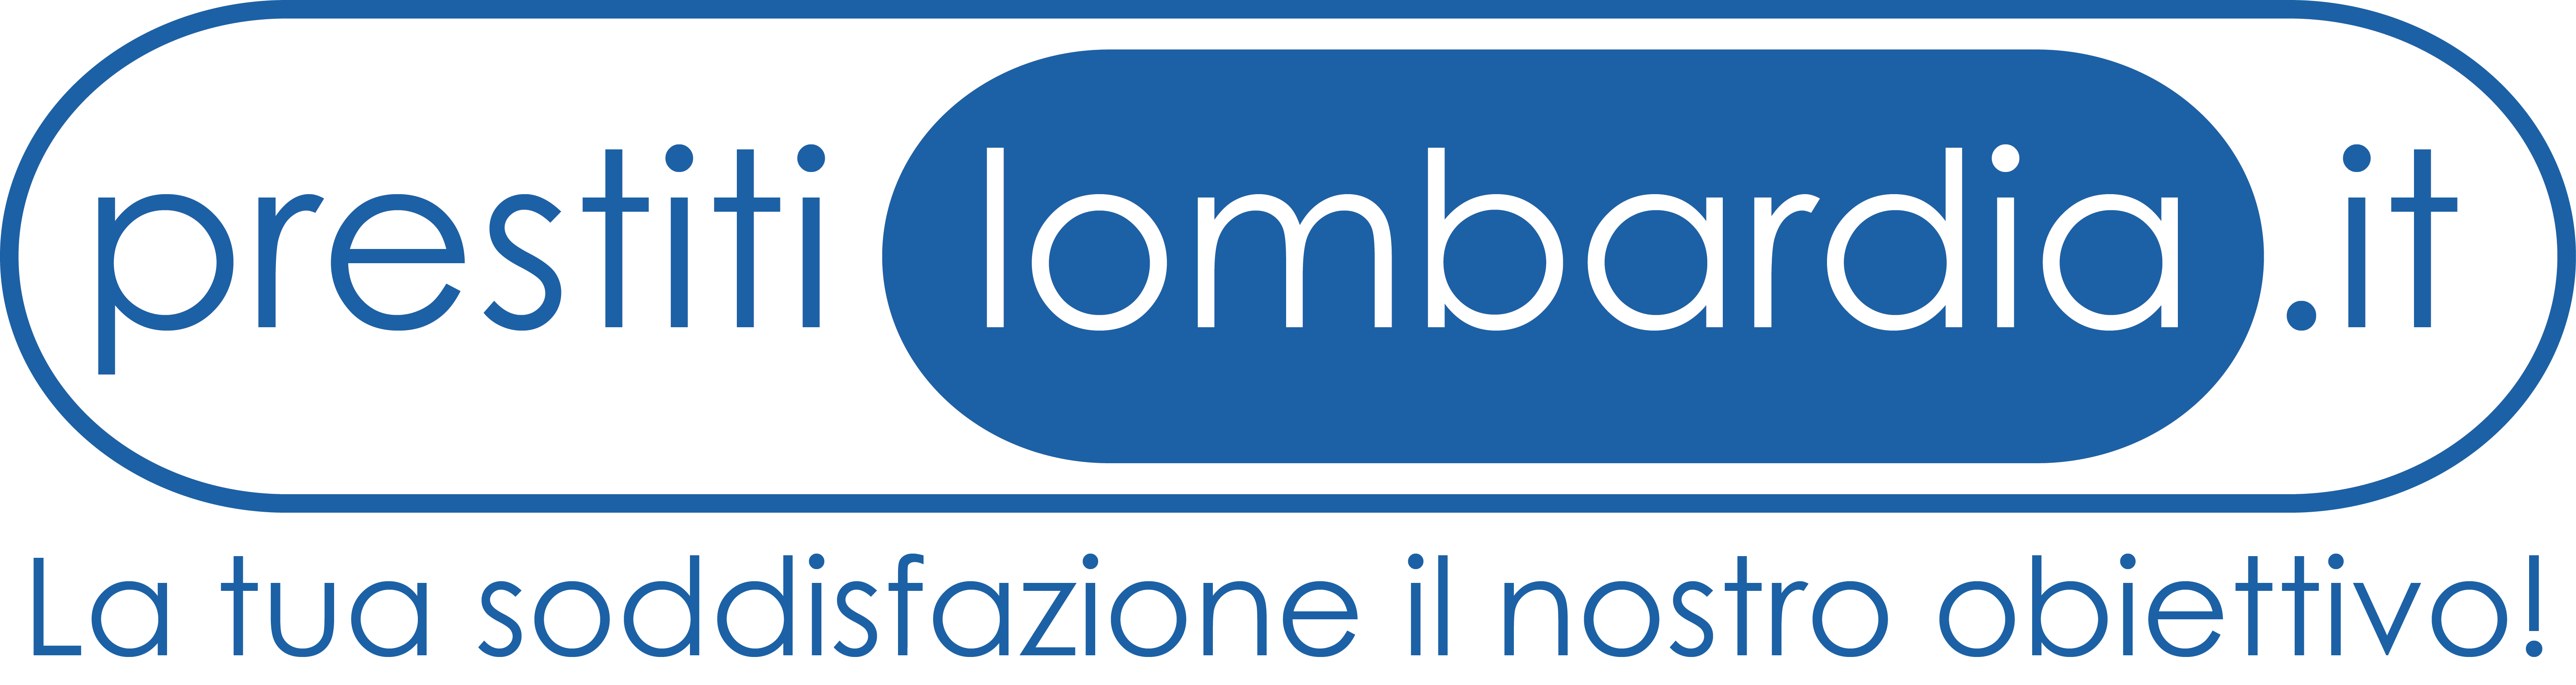 Prestiti Lombardia